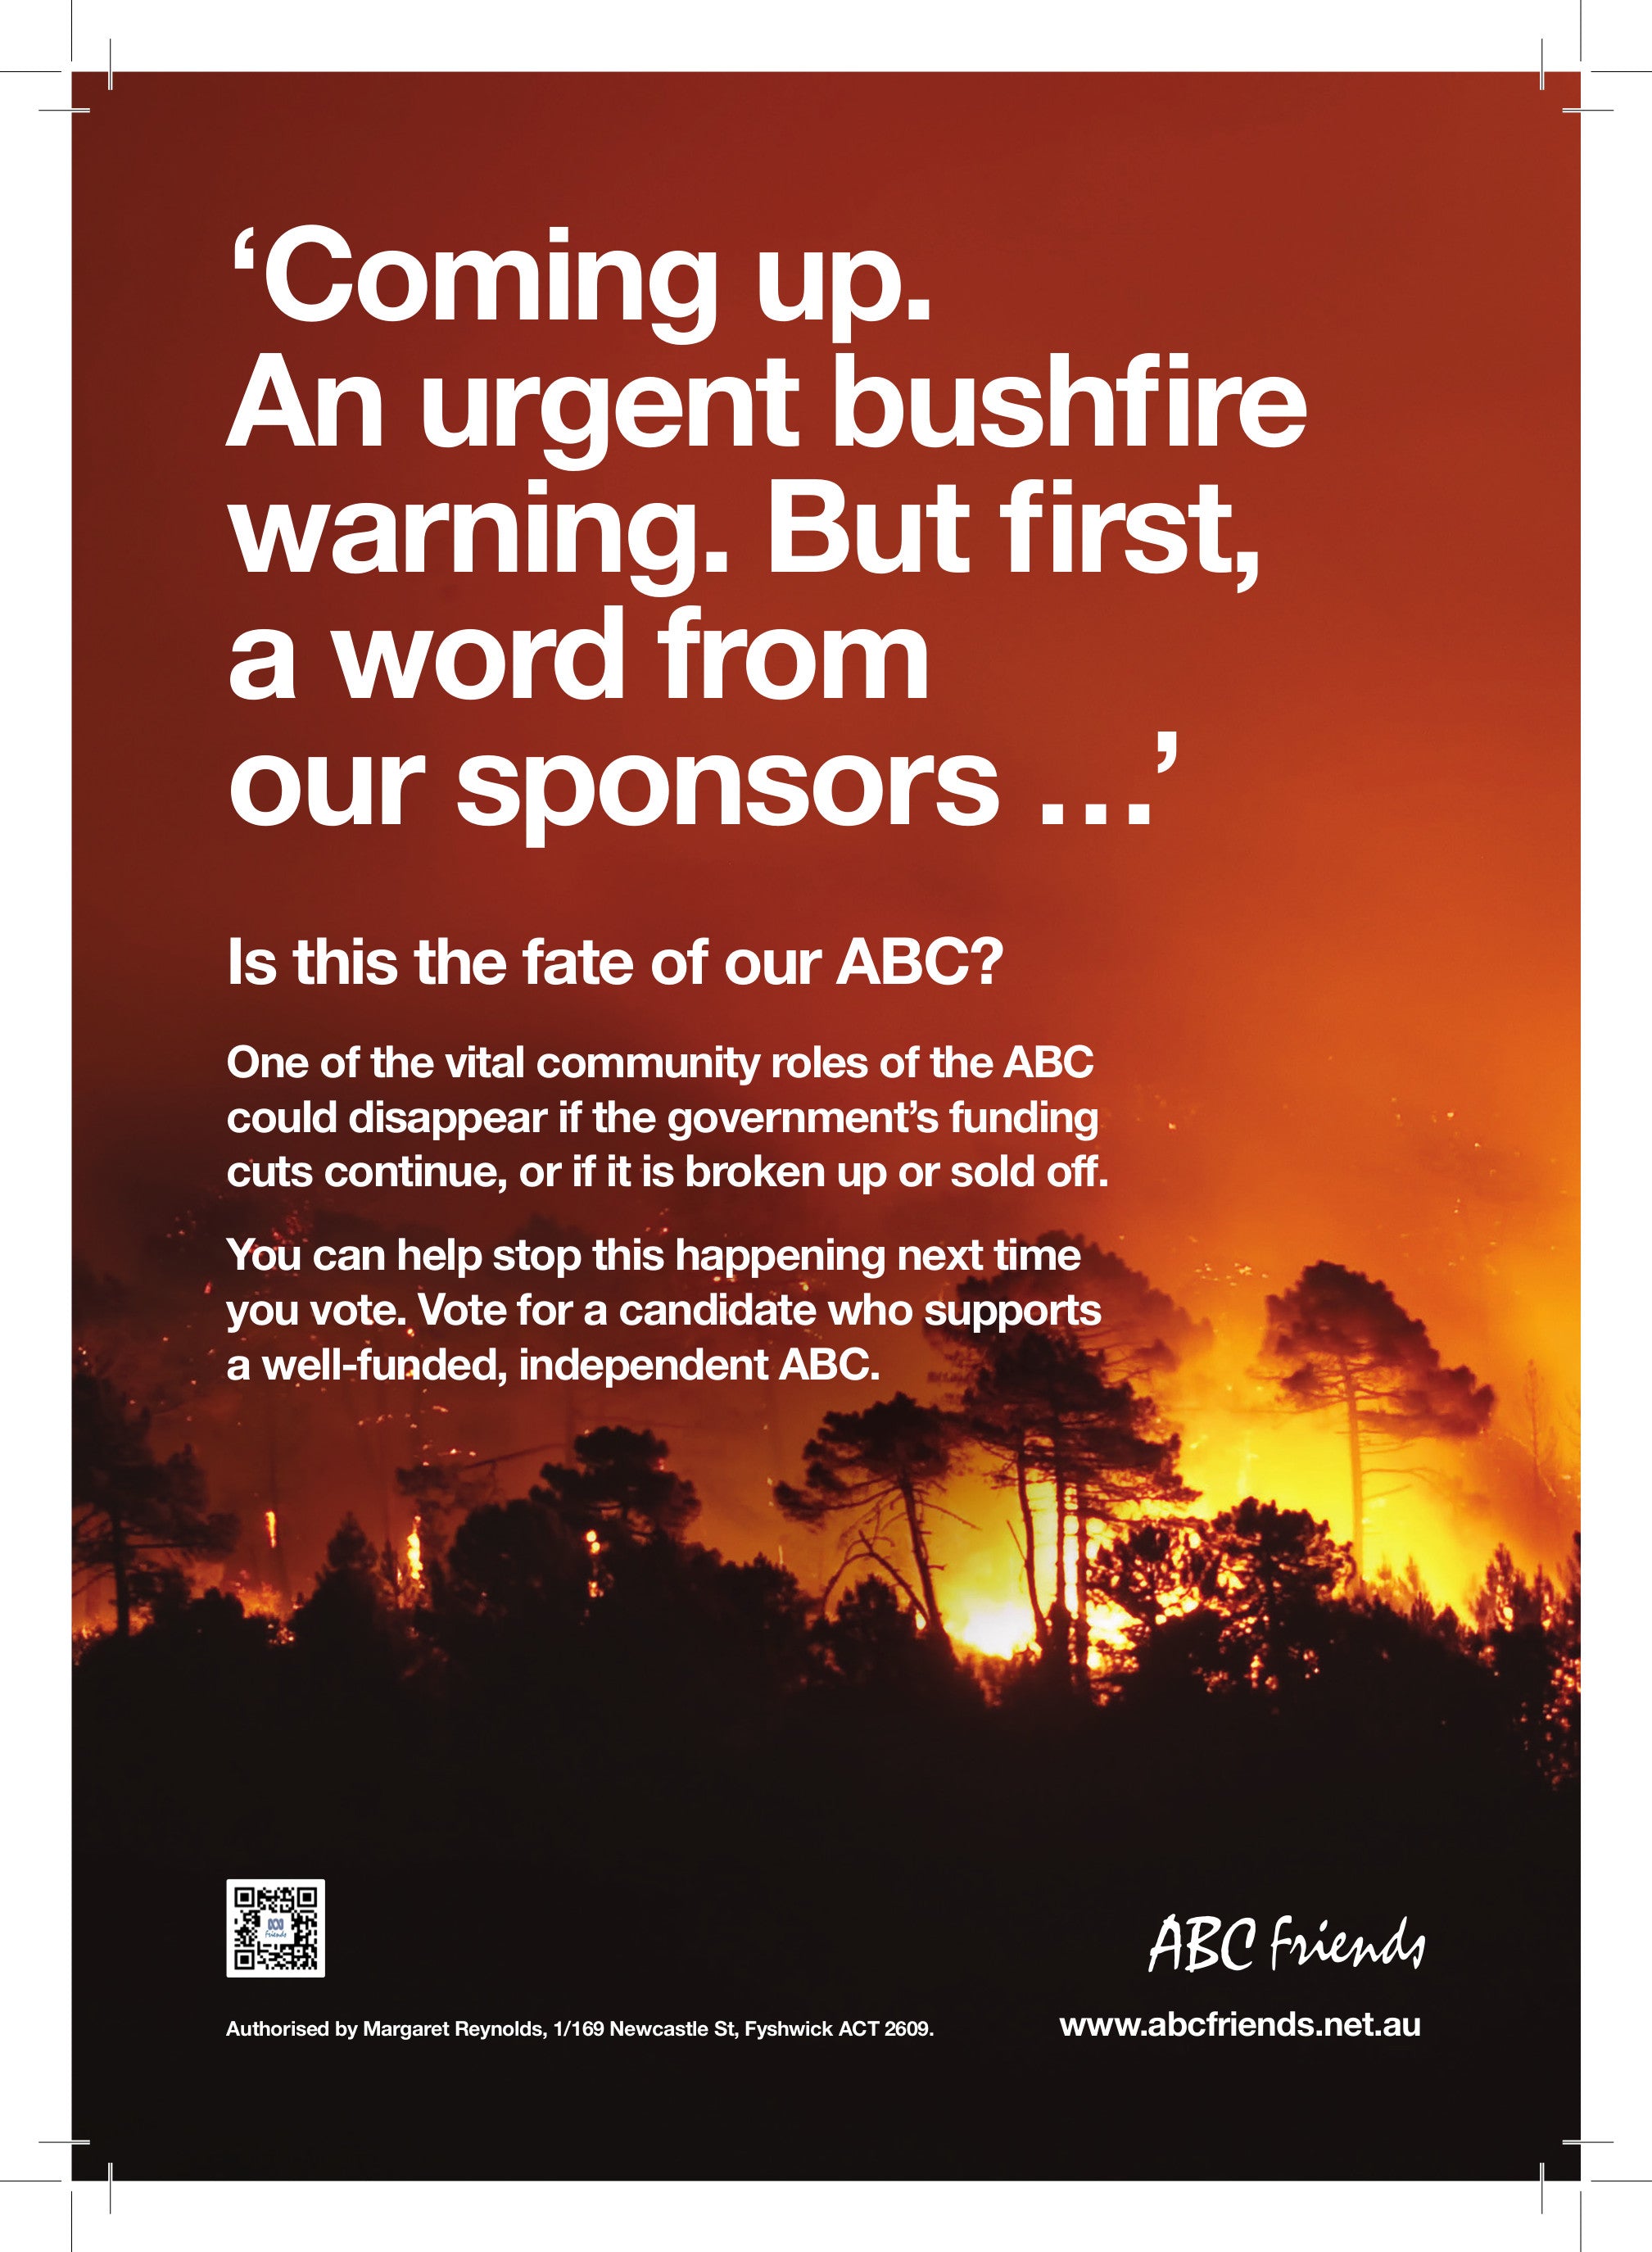 Poster: An urgent bushfire warning